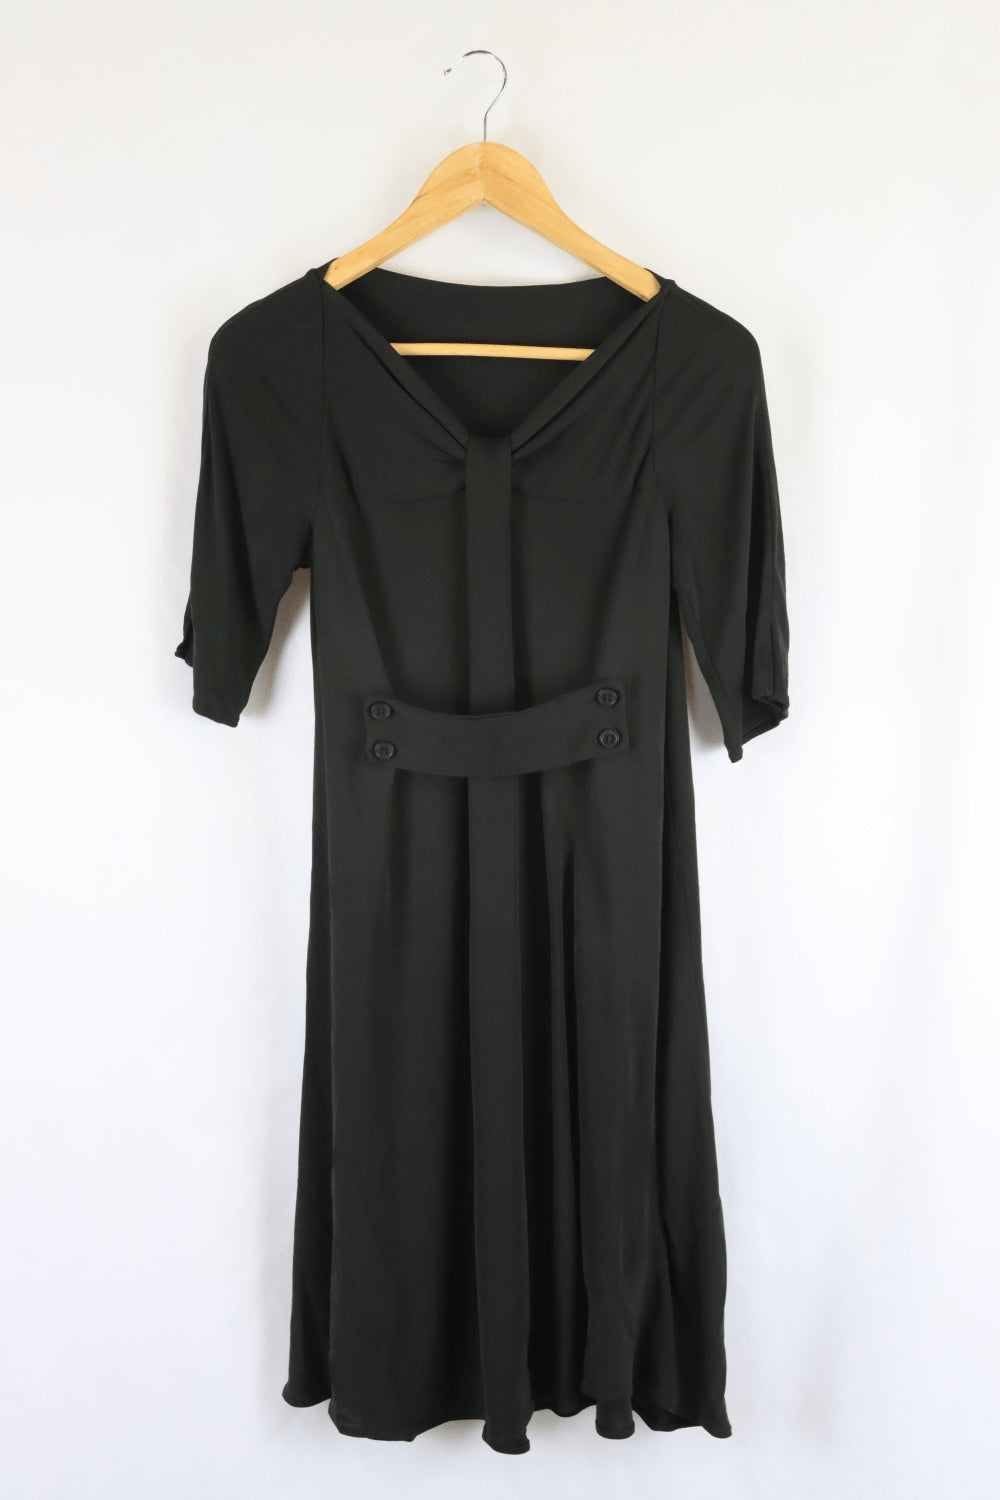 Scanlan Theodore Black Dress S